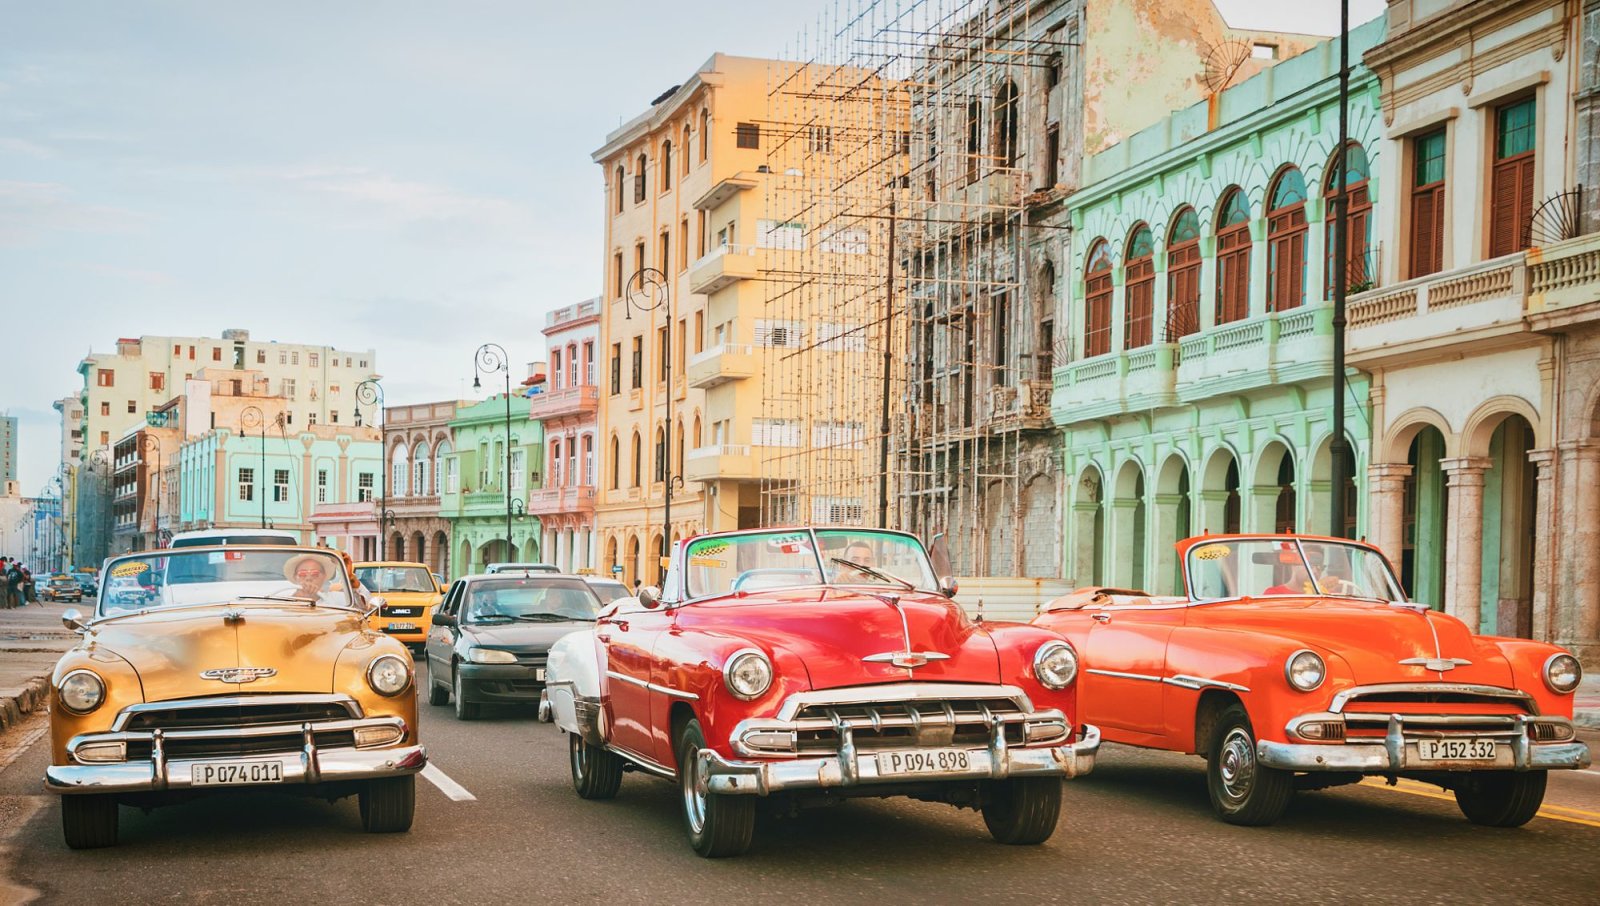 Cuba - Vintage American Cars